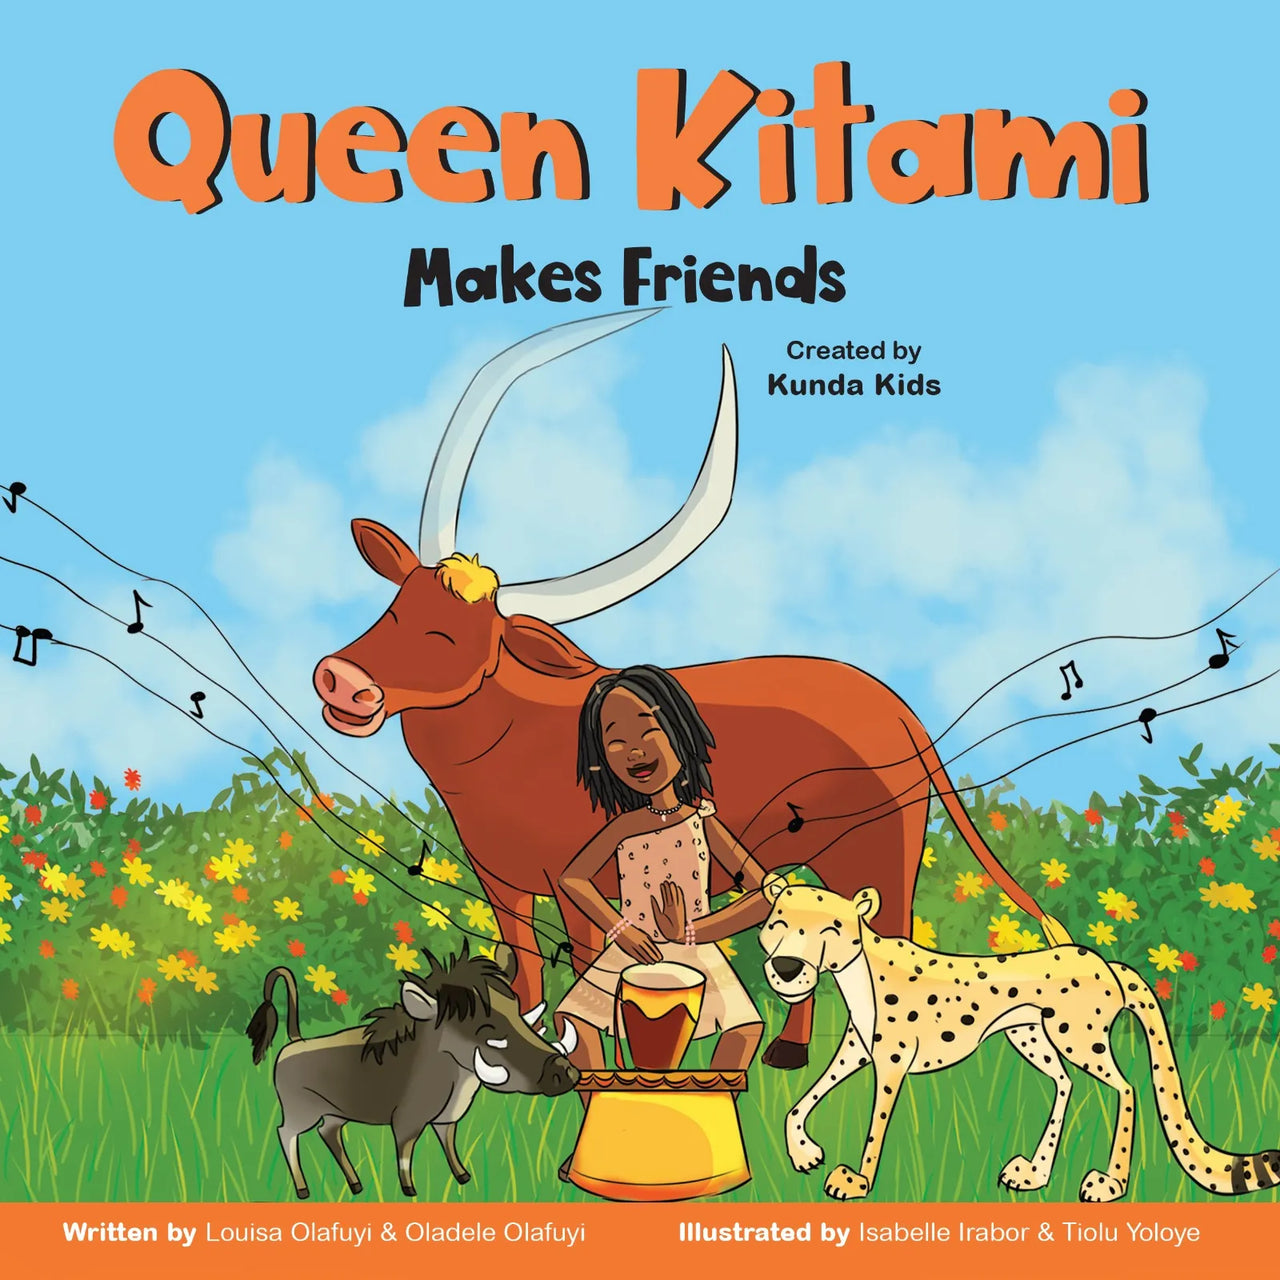 Queen Kitami by Louisa Olafuyi & Oladele Olafuyi